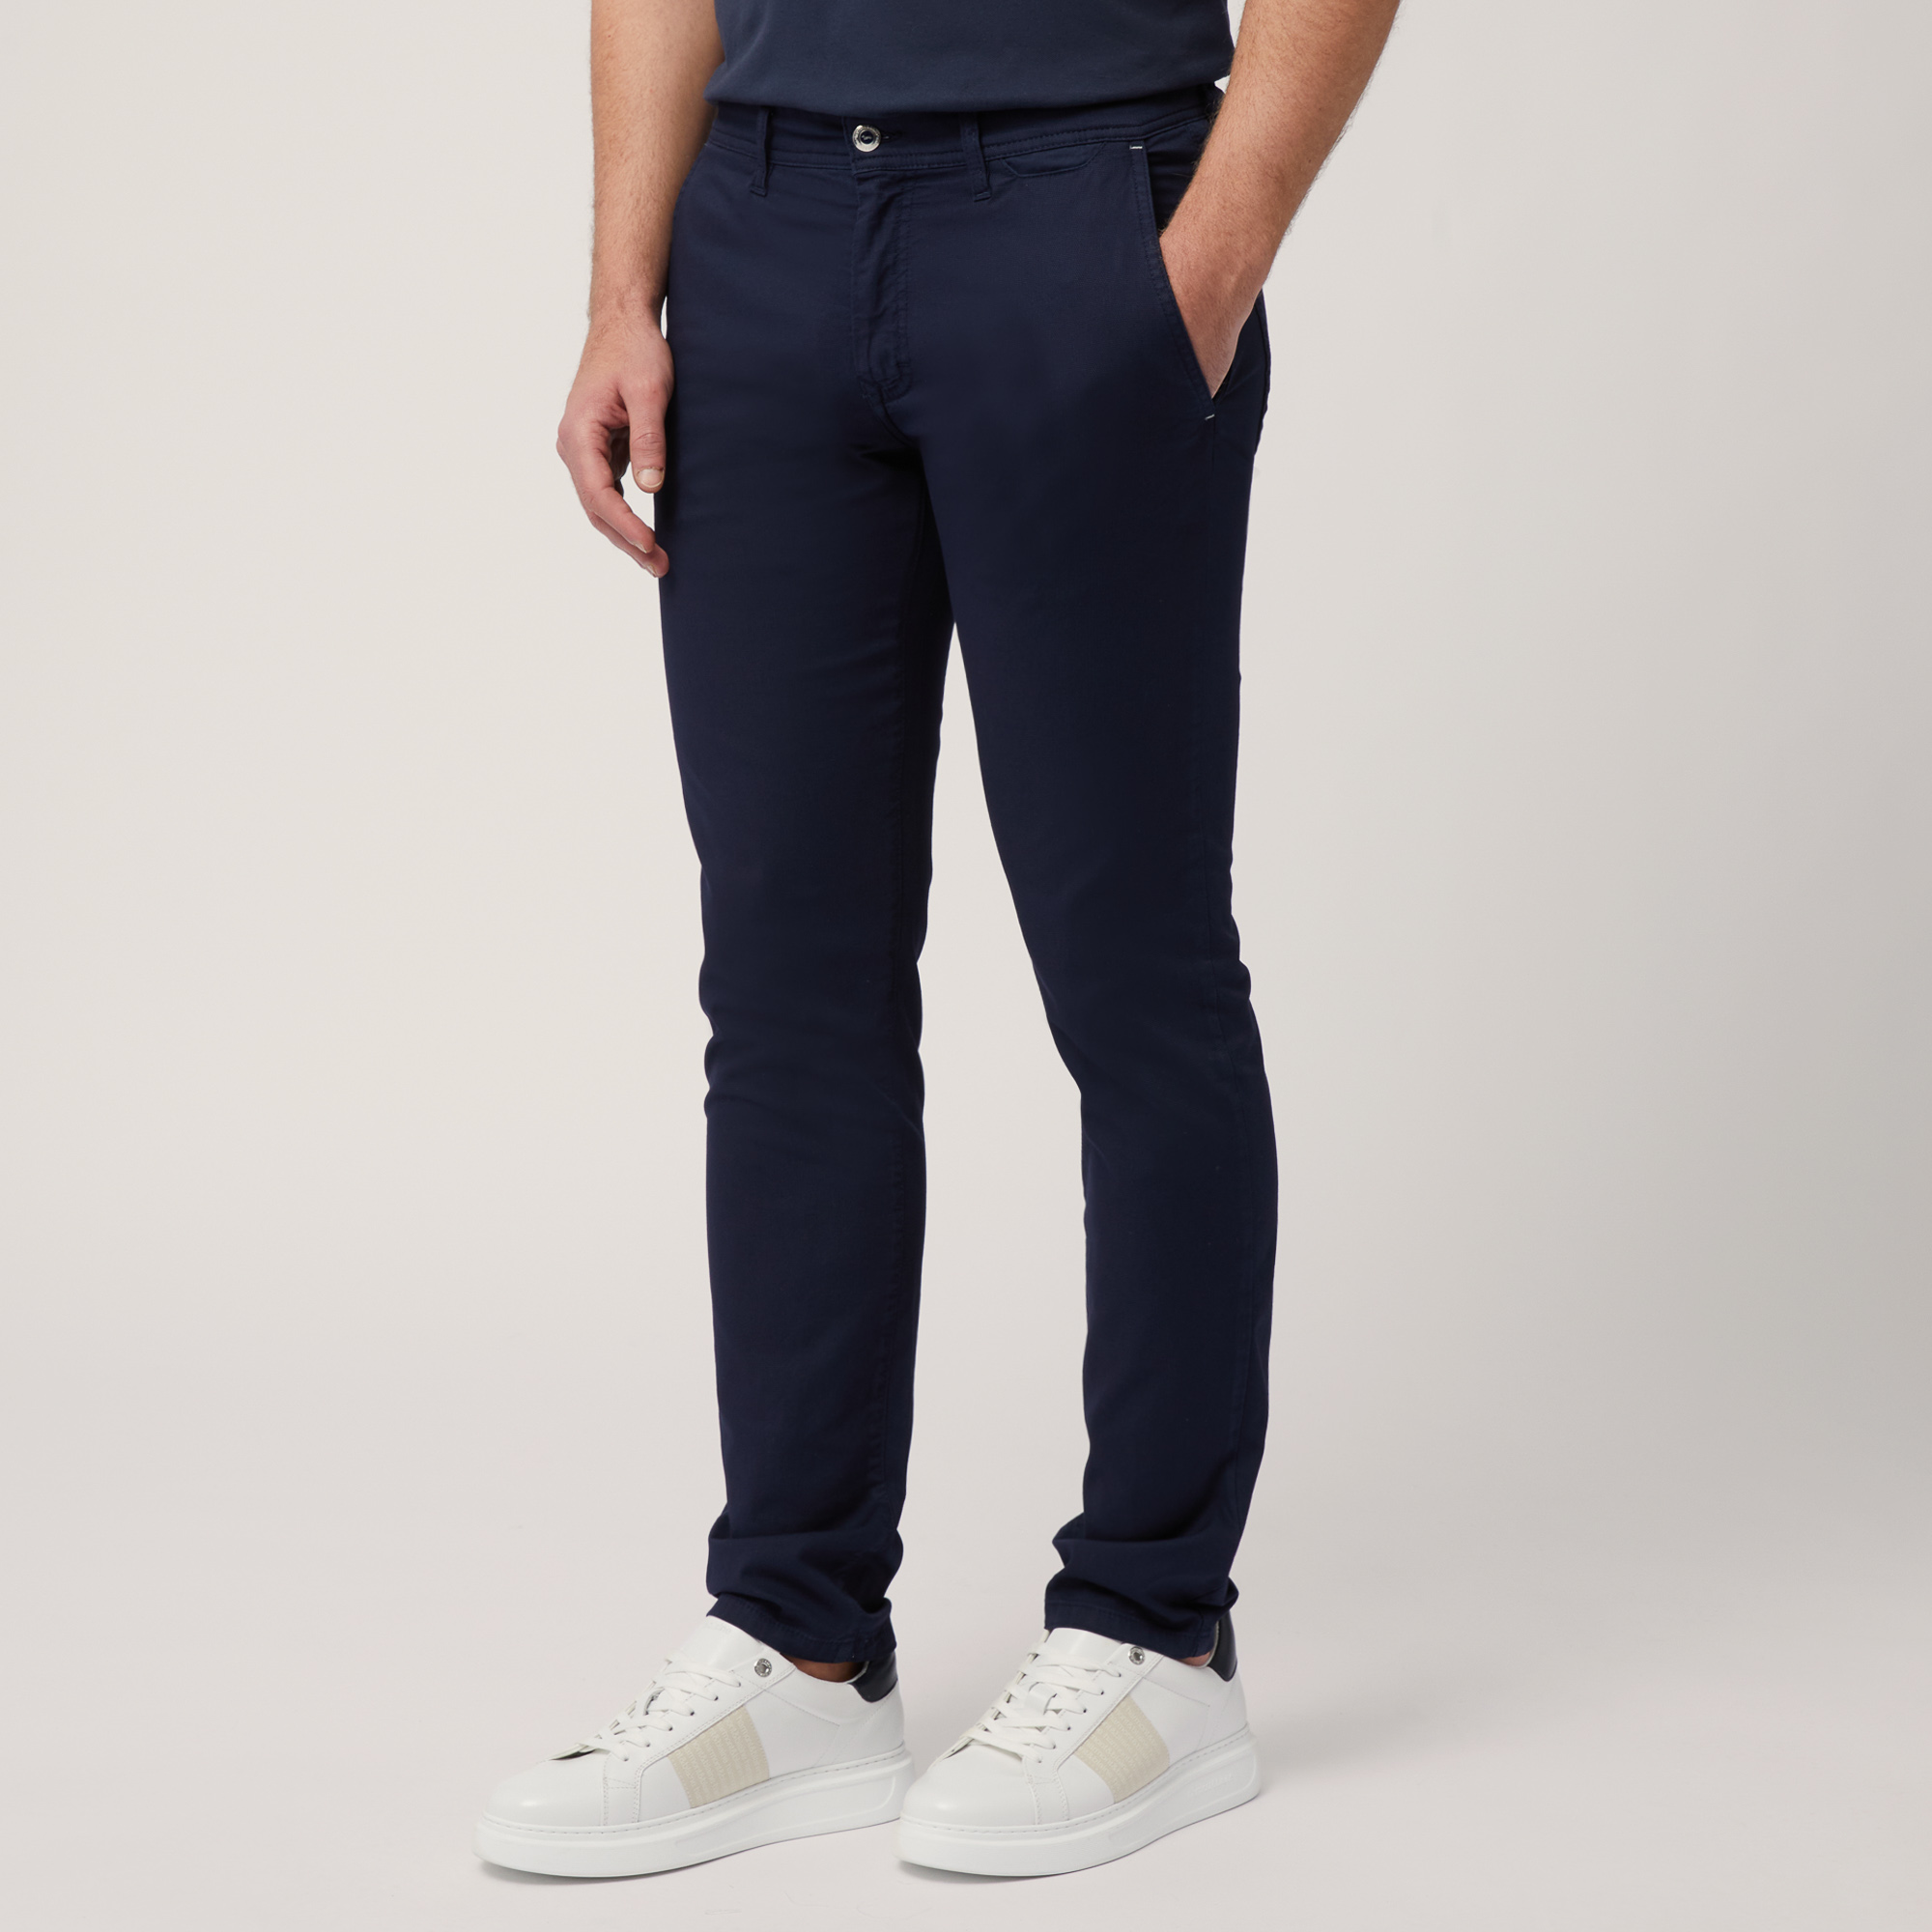 Pantaloni Colorfive, Blu Navy, large